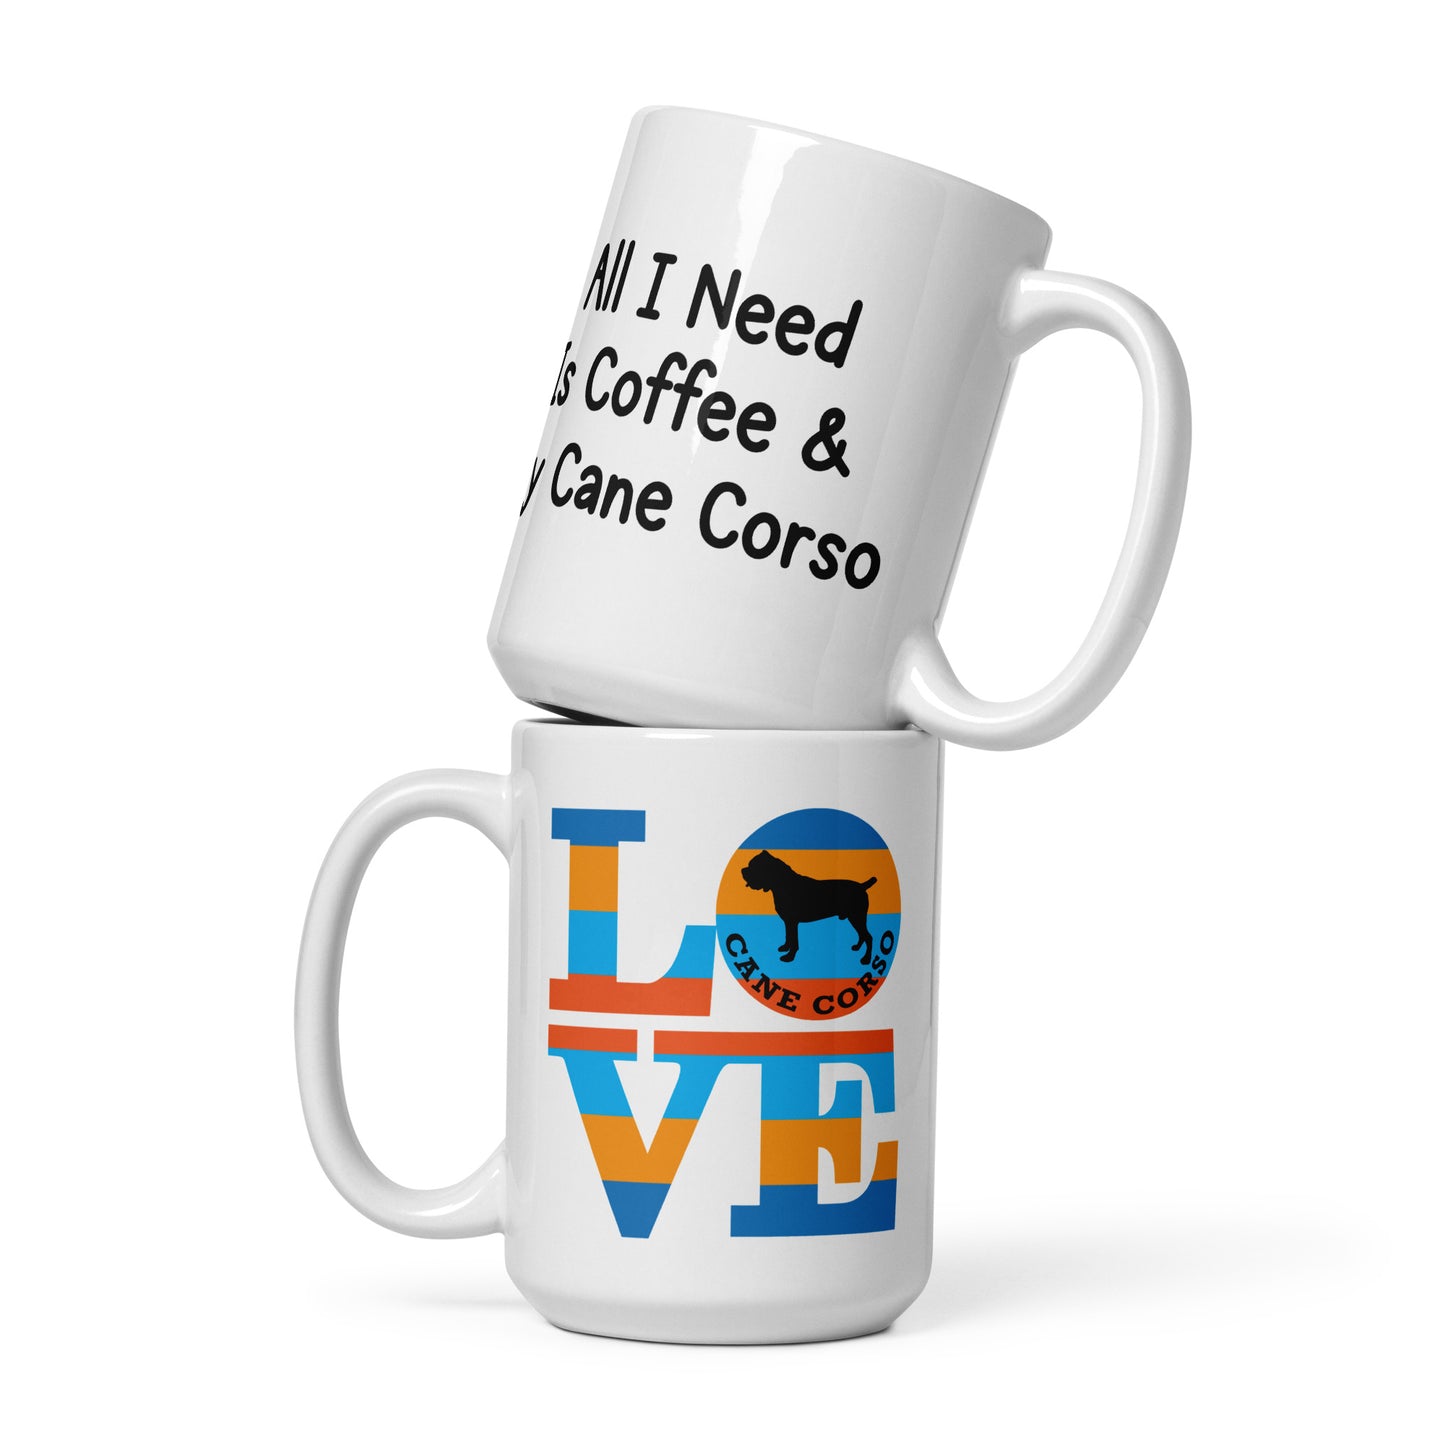 All I need is coffee & my Cane Corso mug by Dog Artistry.